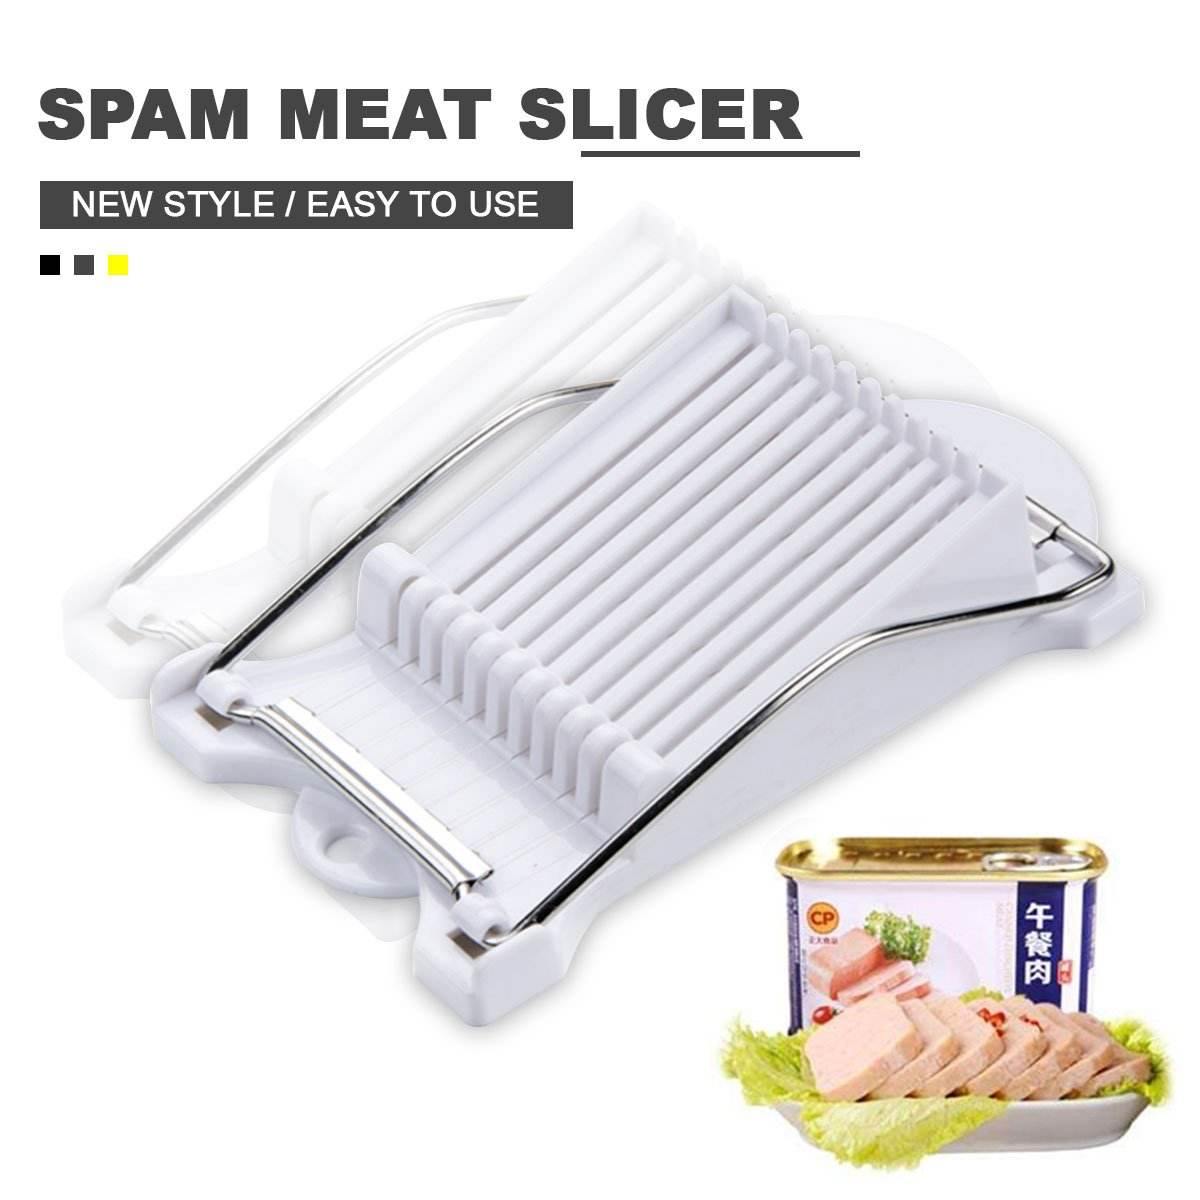 2 Pack Spam Slicer, Egg Slicers, Luncheon Meat Slicer, Stainless